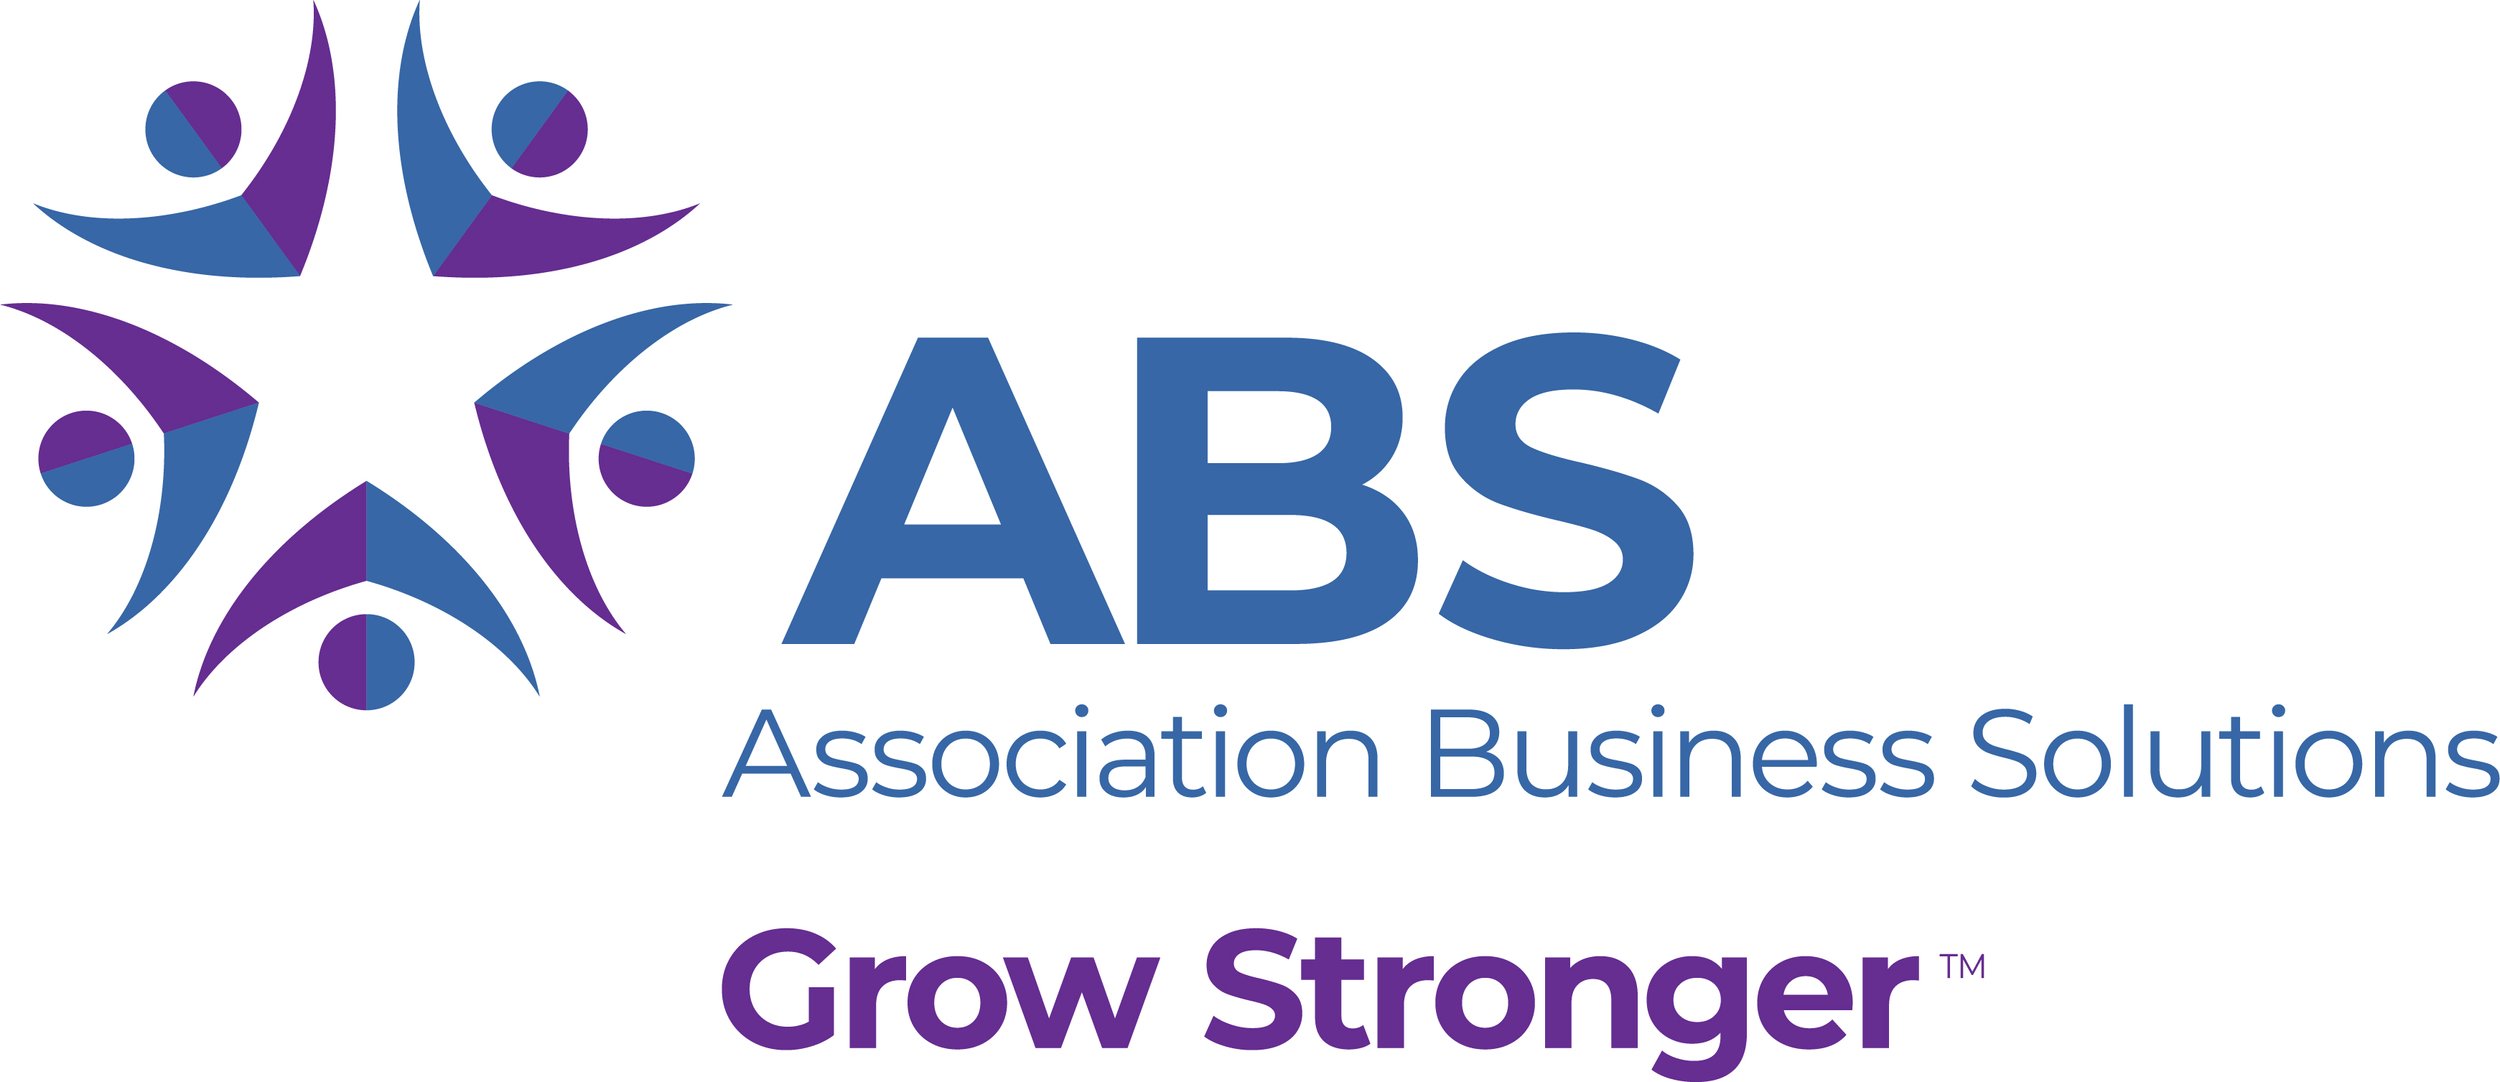 Association Business Solutions